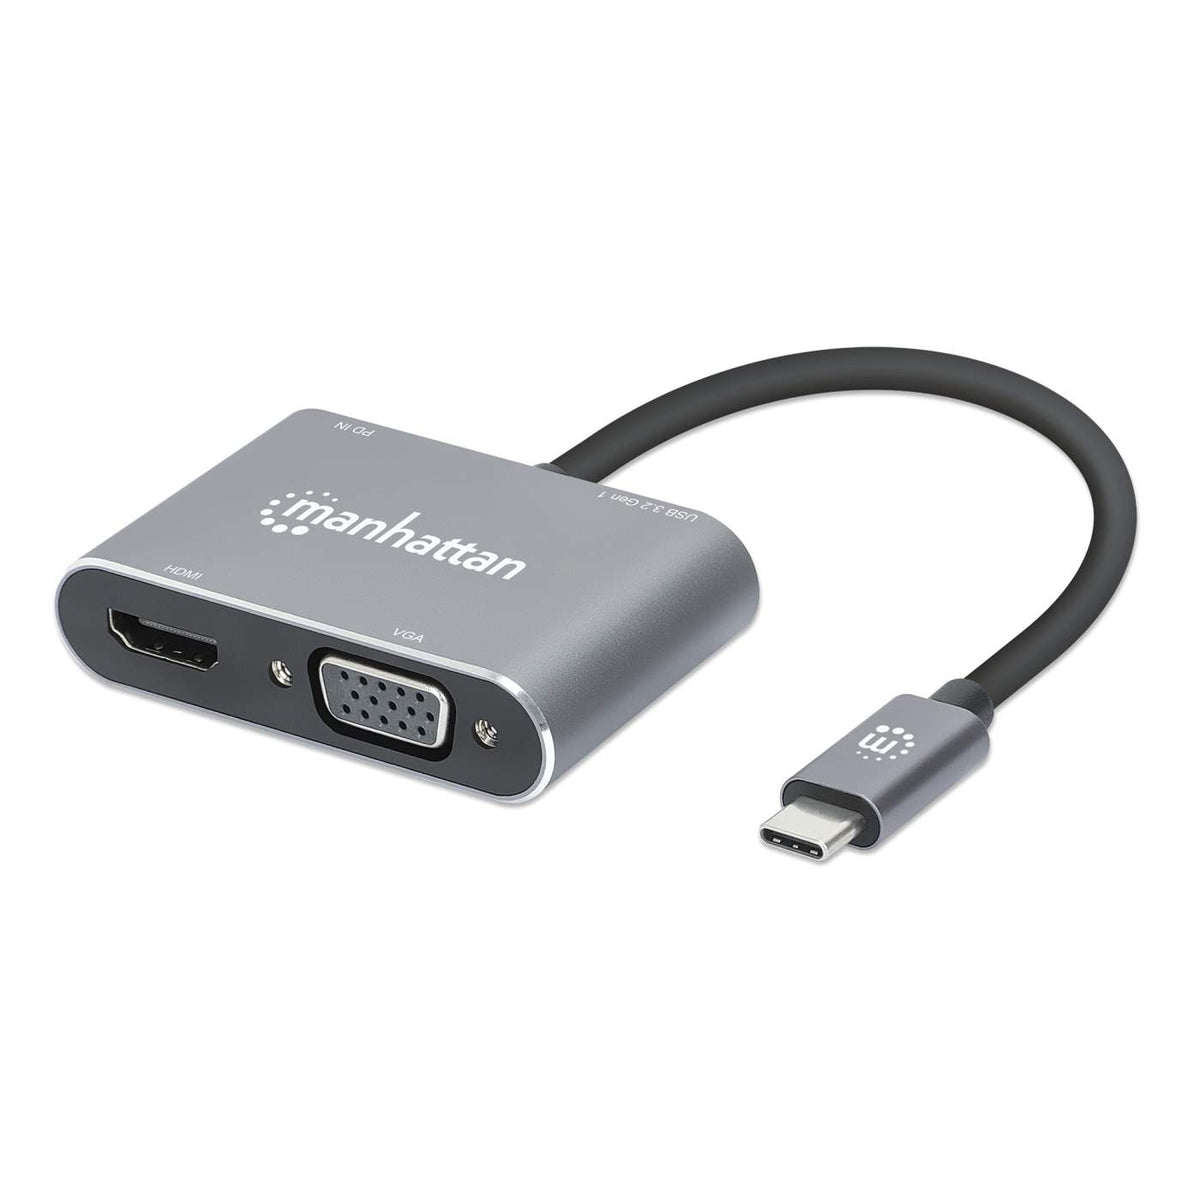 Concentrateur USB-C 11 en 1 - 4x USB 3.0, Audio, VGA, HDMI, LAN